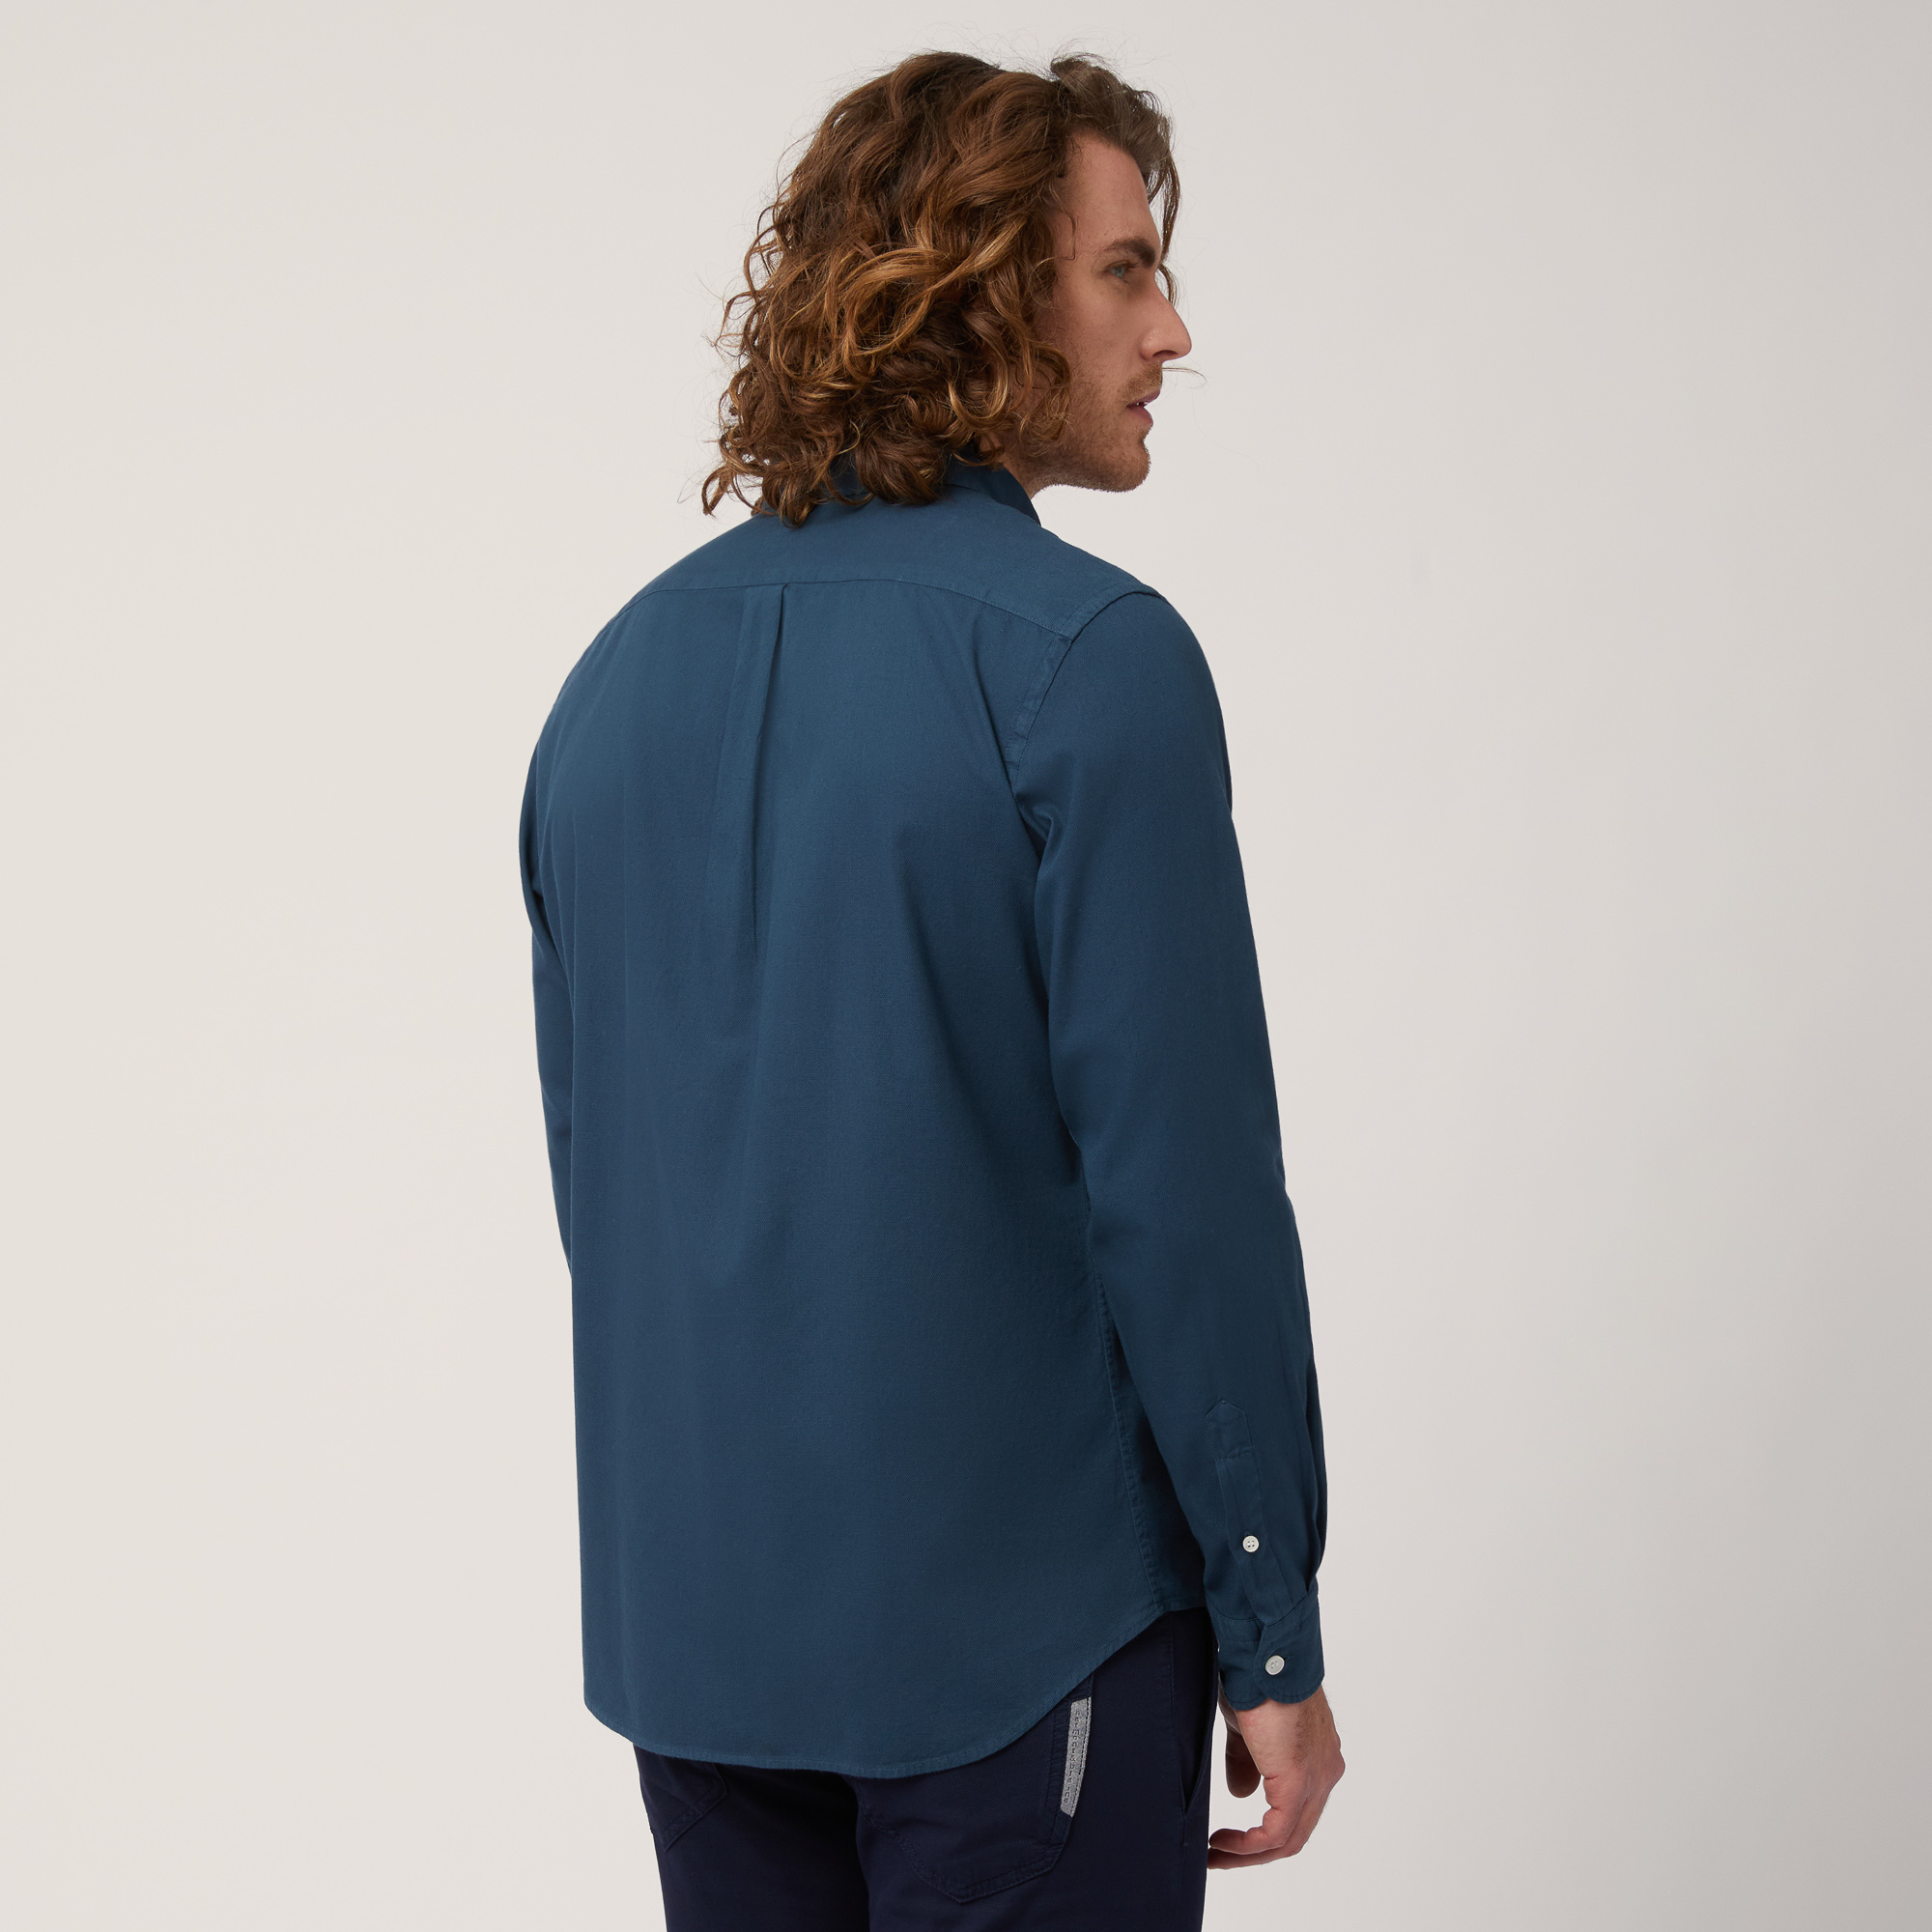 Camicia In Cotone Con Interni A Contrasto, Blu Navy, large image number 1